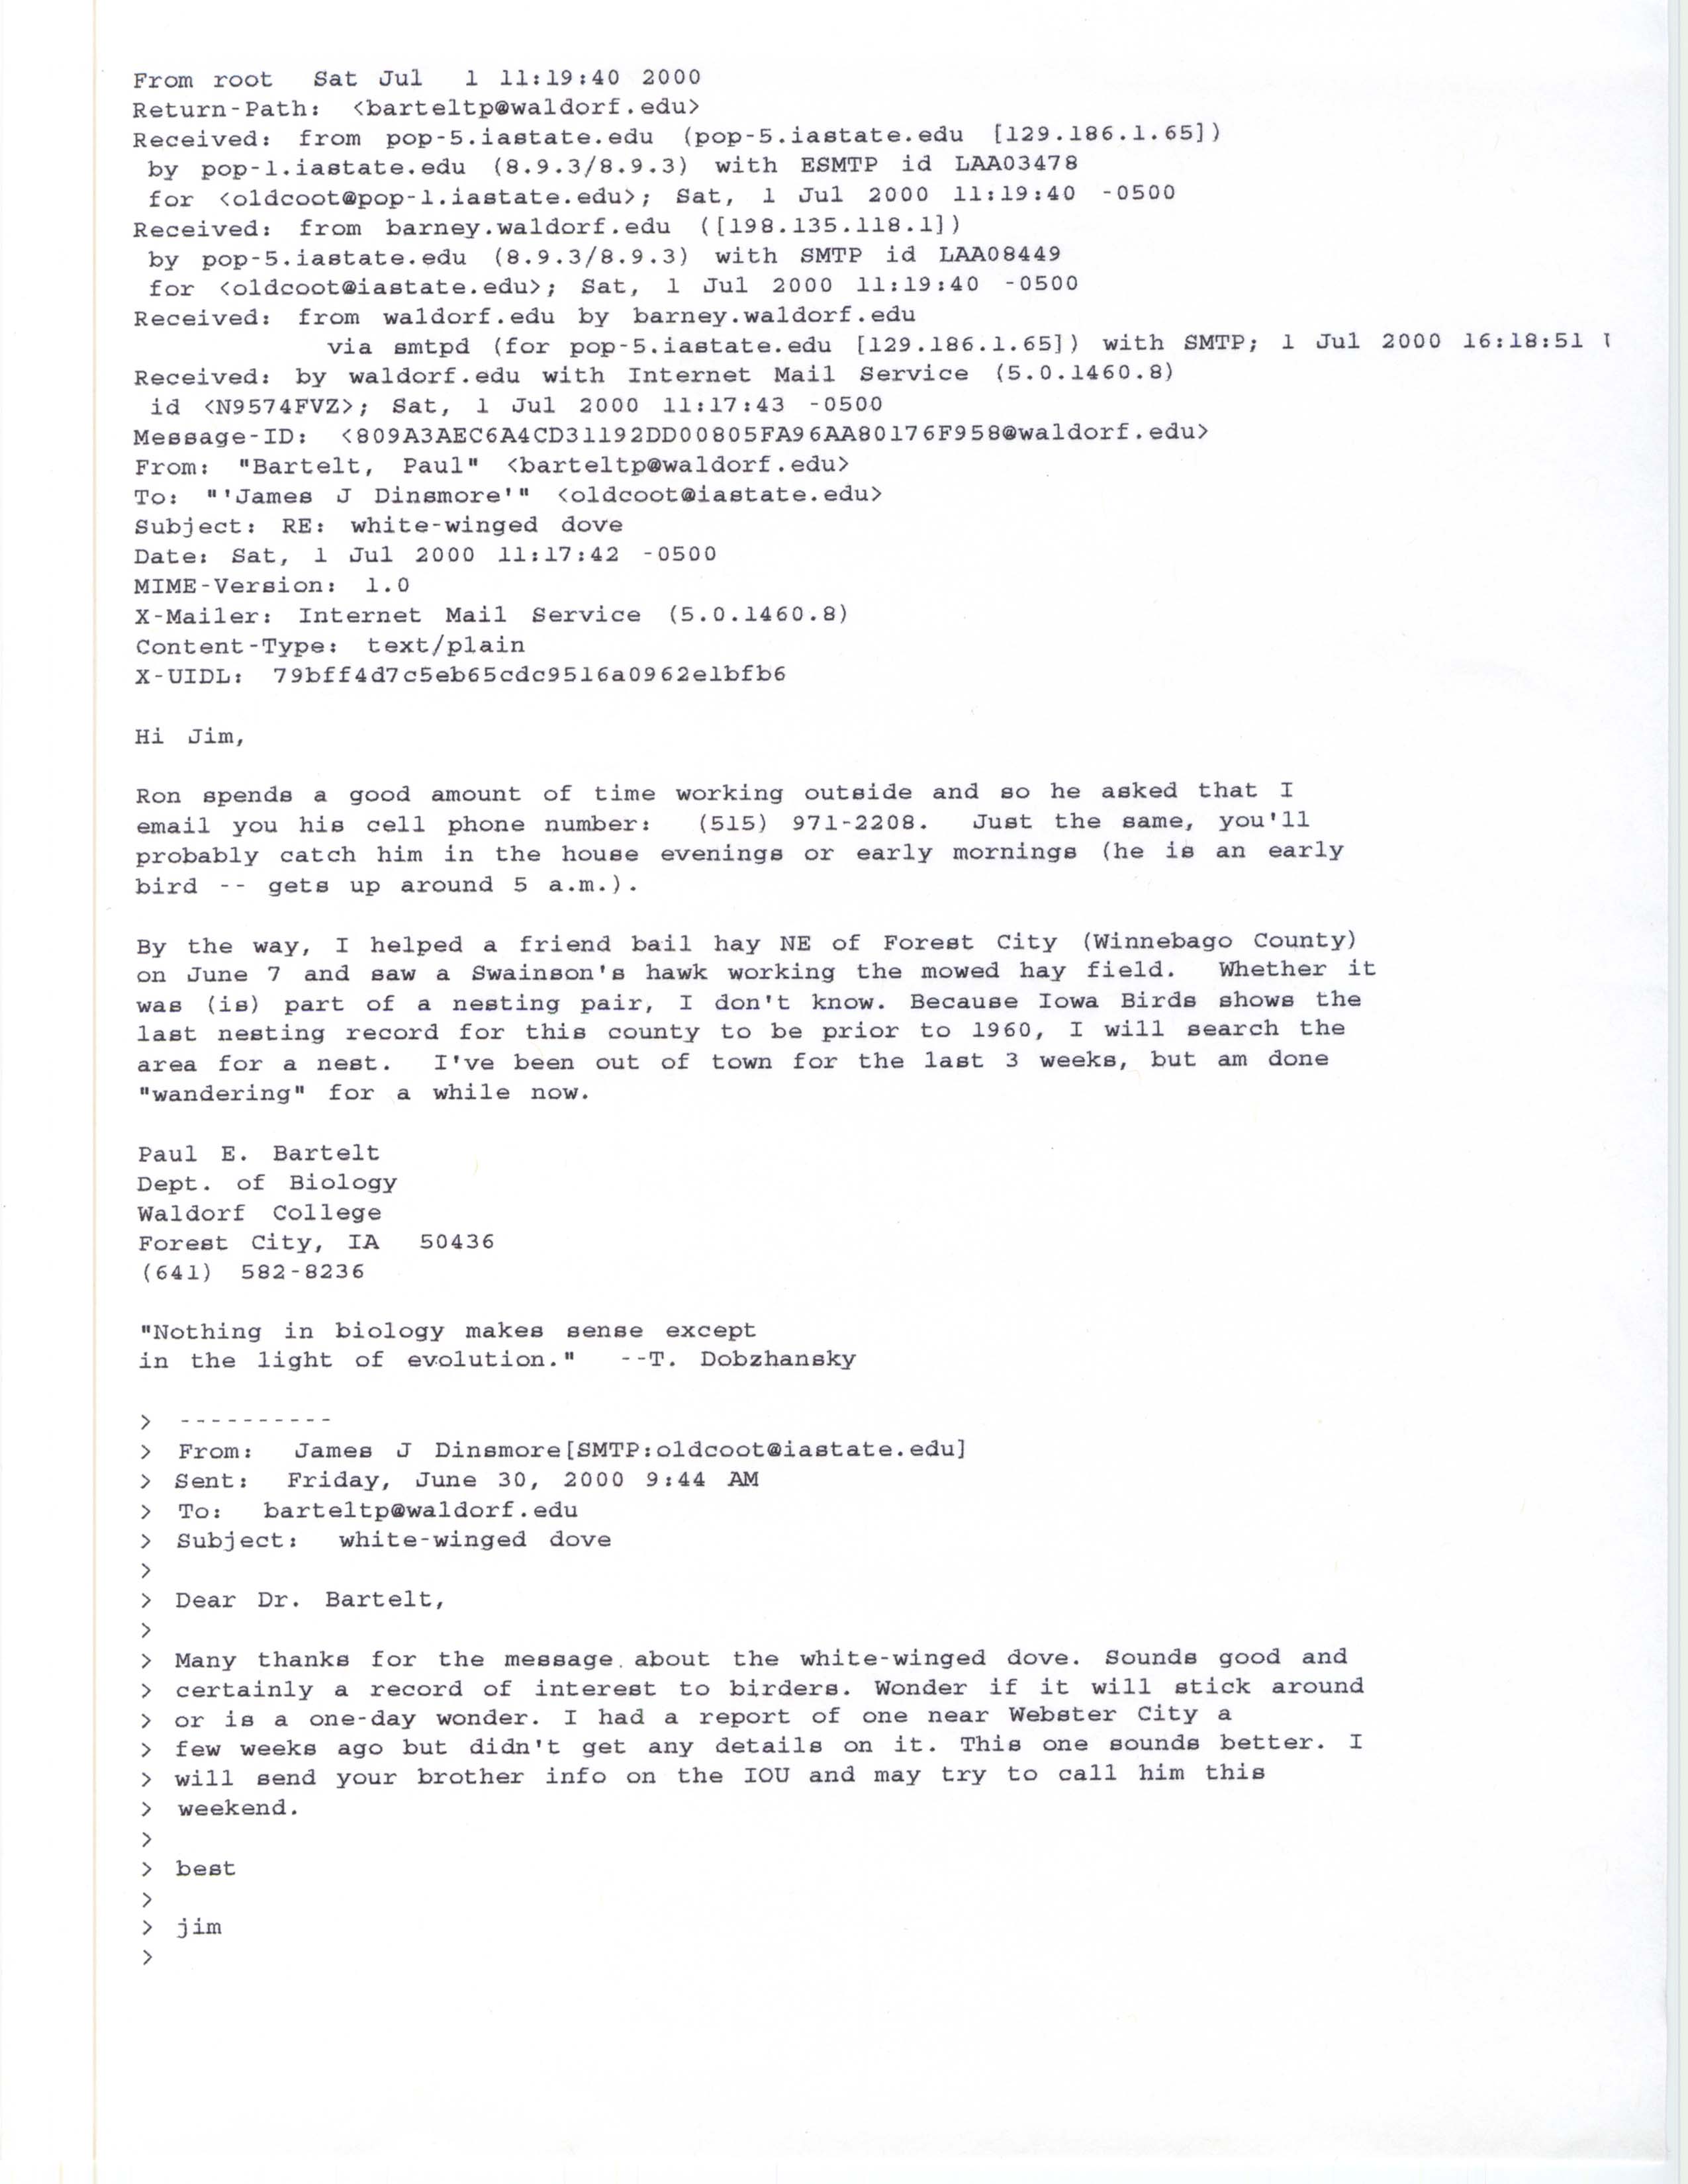 Paul Bartelt email to James J. Dinsmore regarding a Swainson's Hawk sighting, July 1, 2000